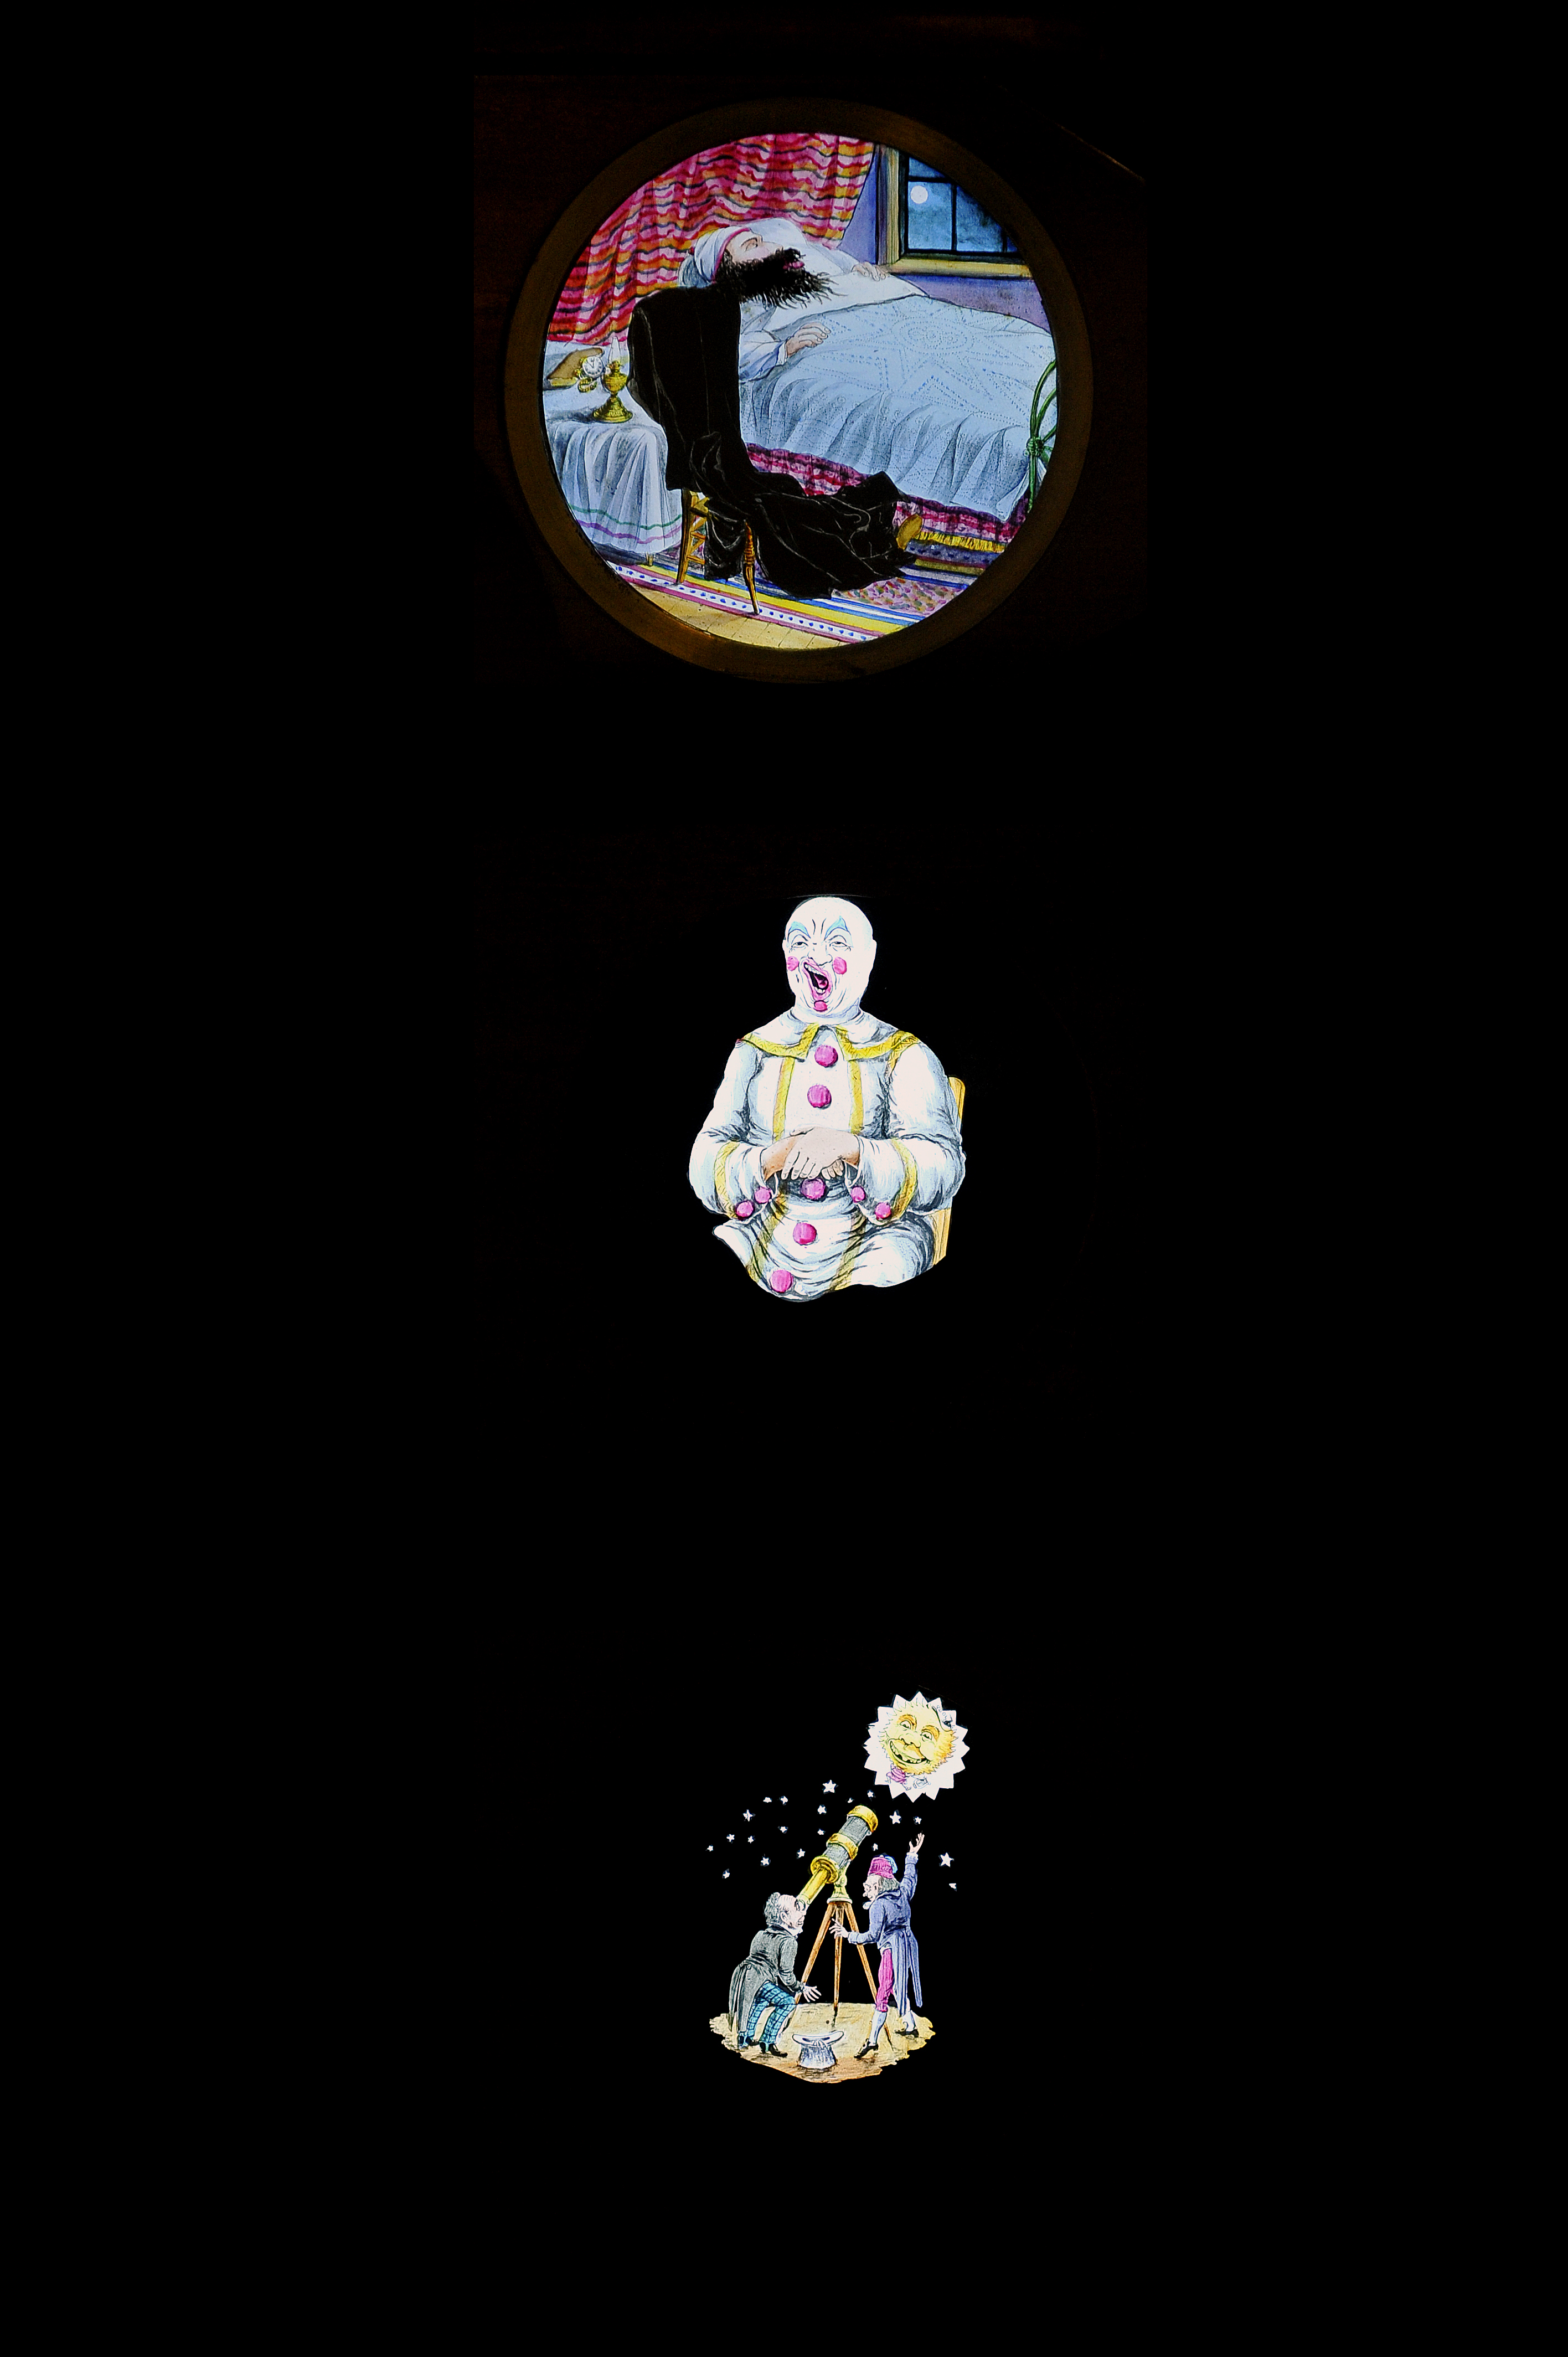 Mahogany-Mounted Hand-Coloured Rackwork Magic Lantern Slides, comic astronomer, clown with twelve